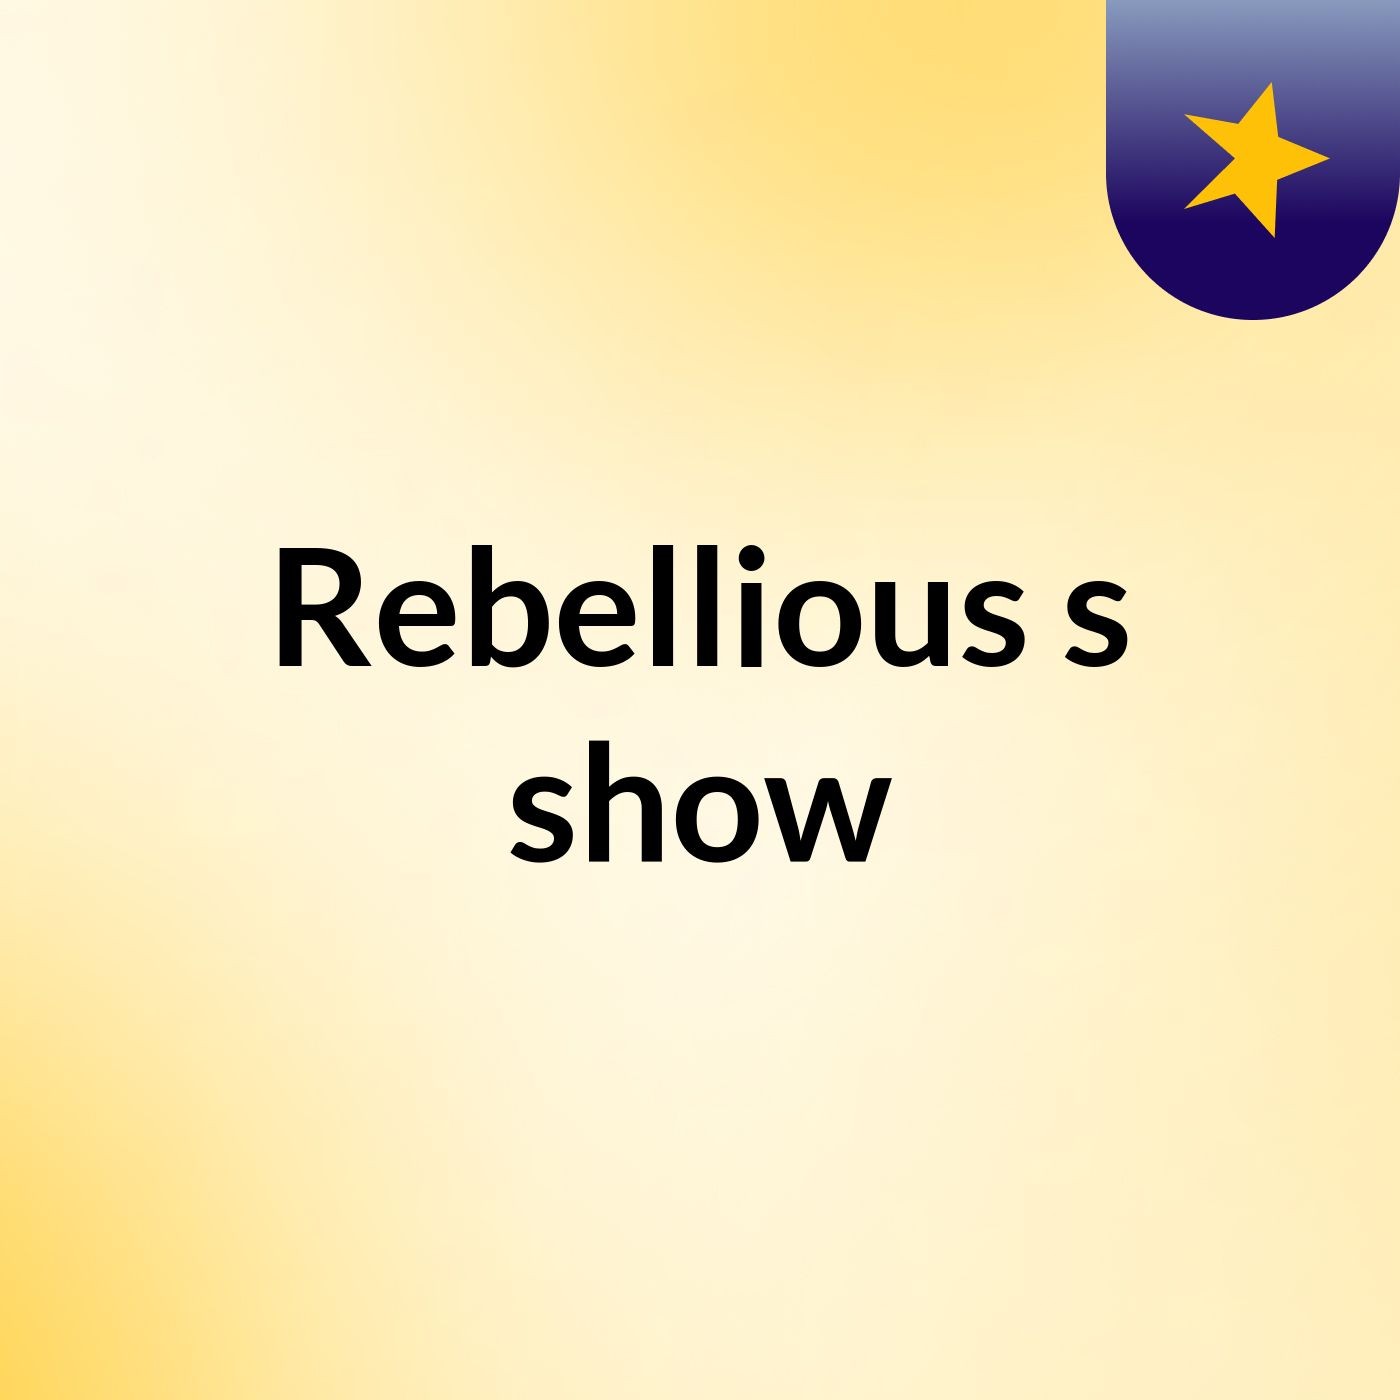 Rebellious's show